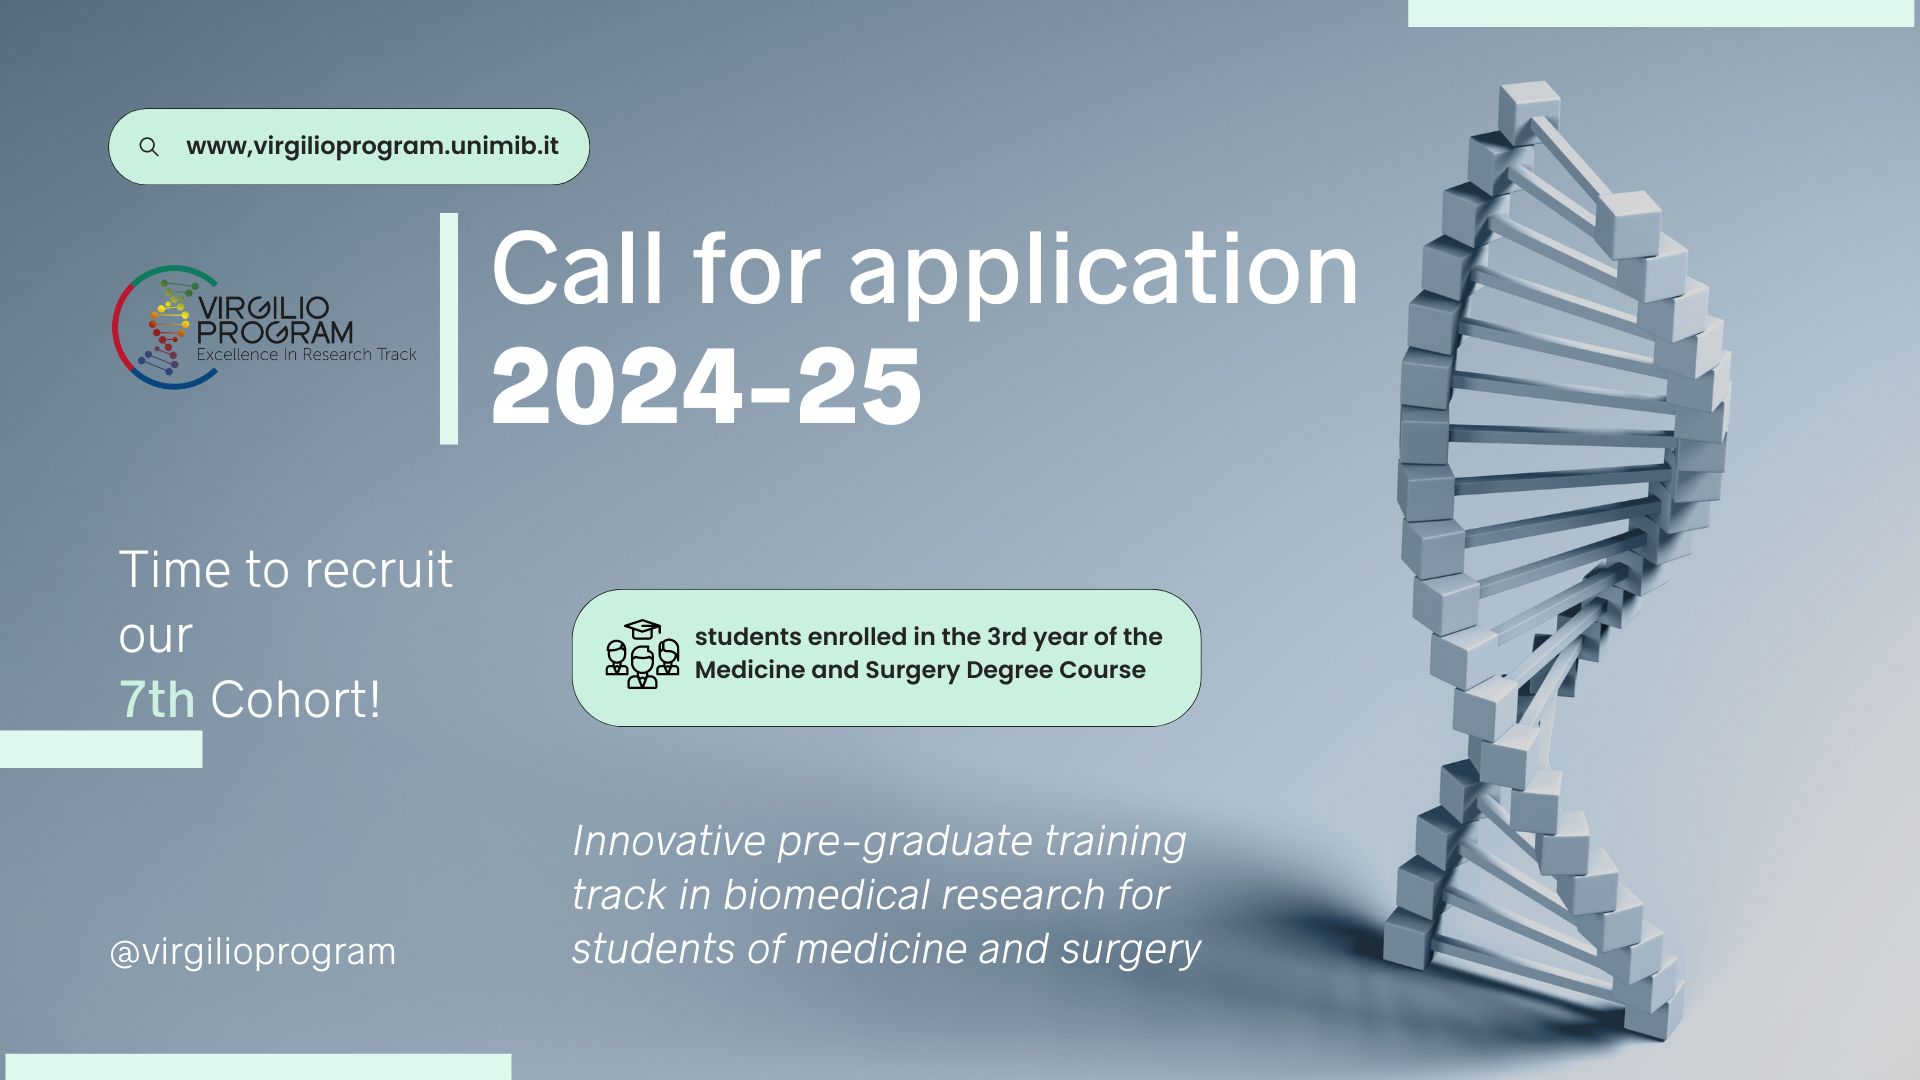 Virgilio program call for application 2024-25